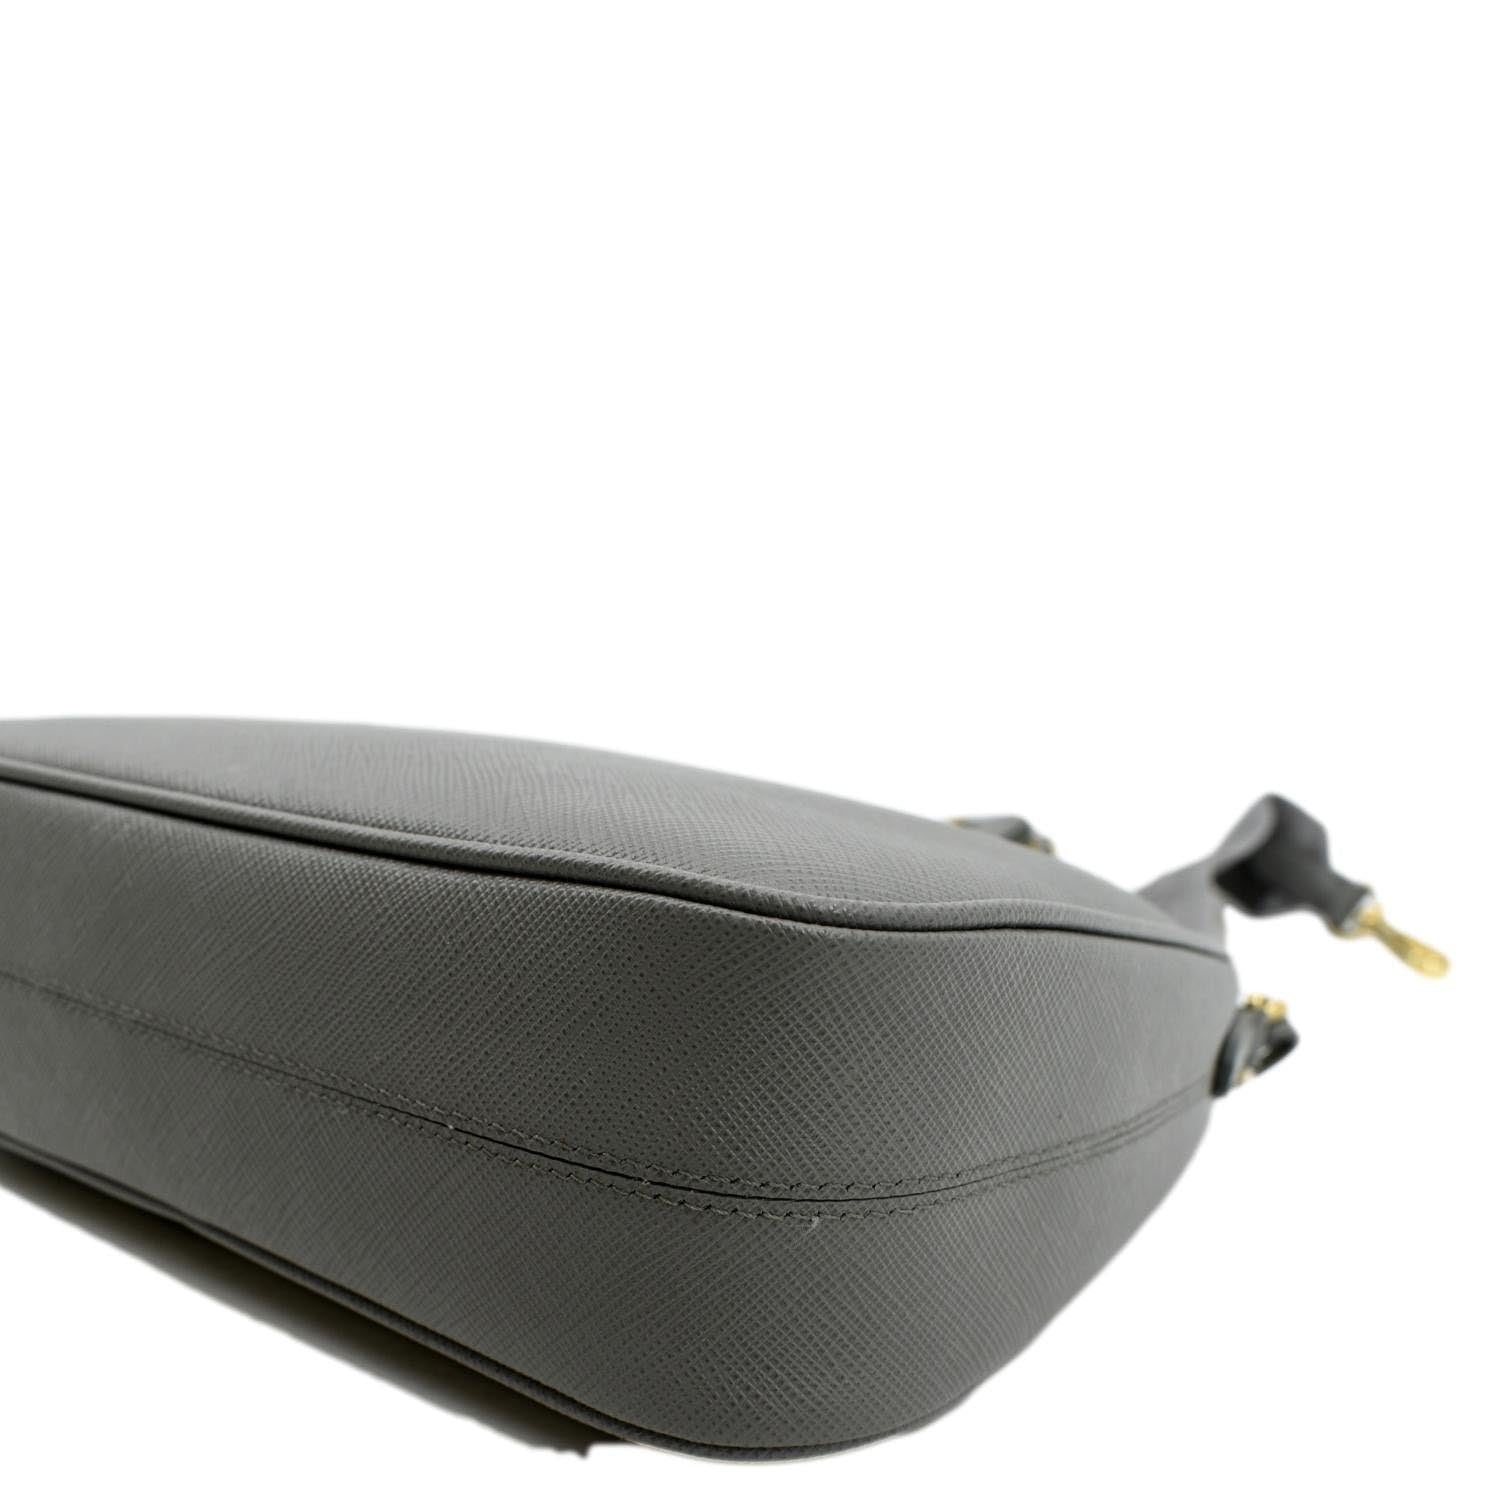 Prada Re-Edition 2005 Saffiano Leather Bag (Grey) – The Luxury Shopper